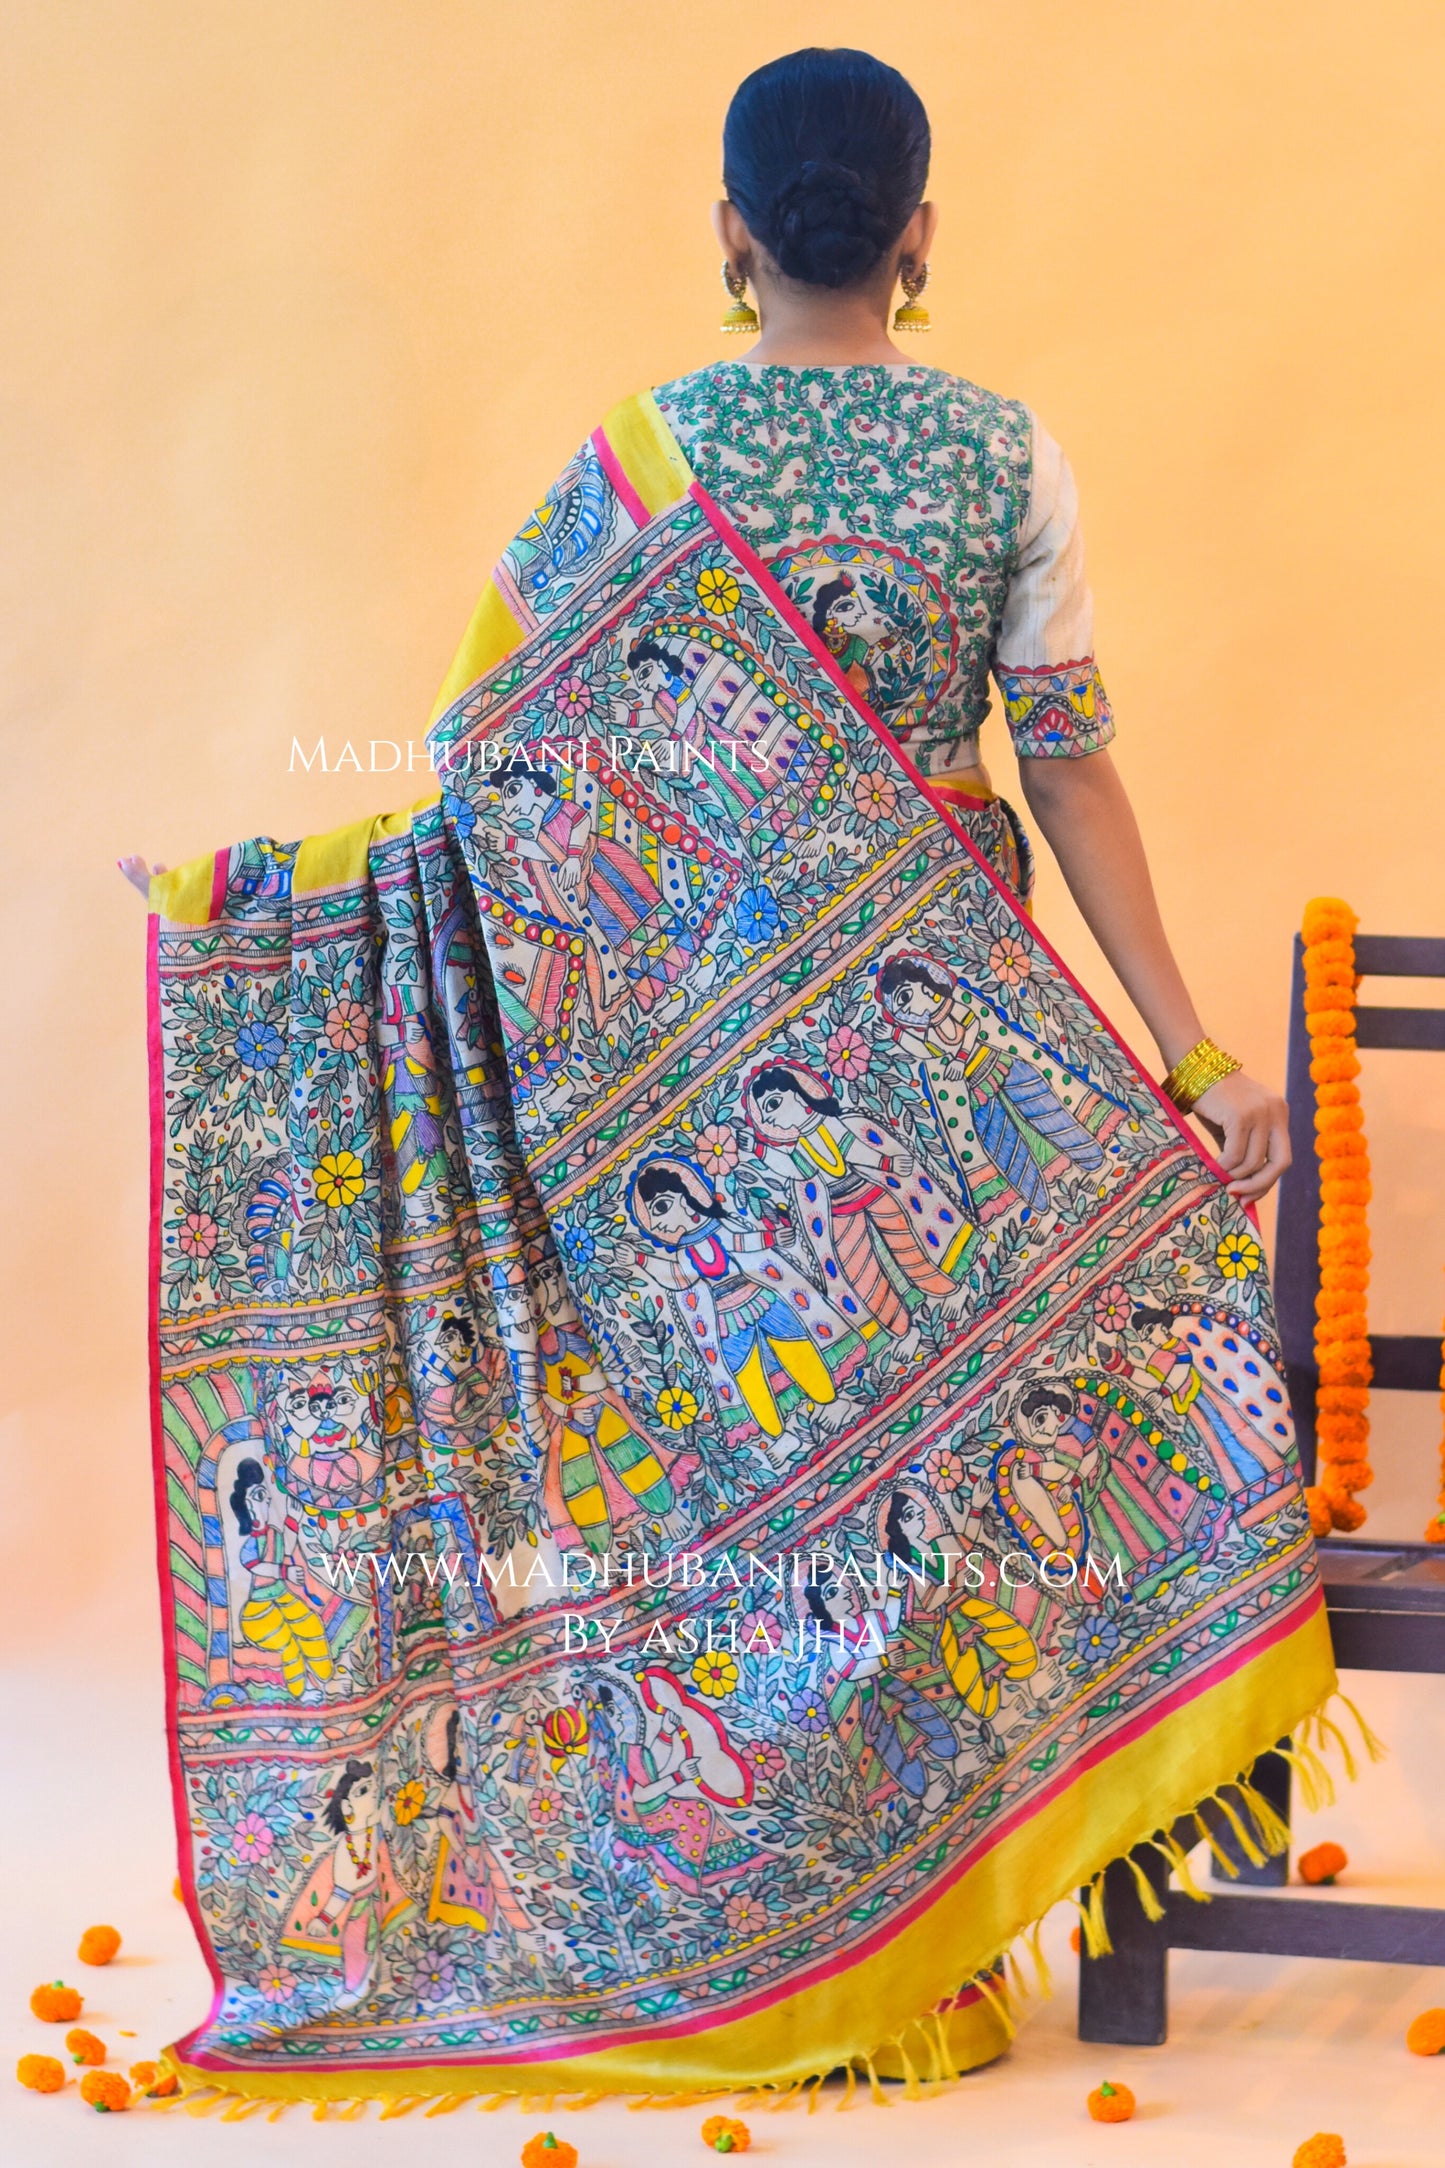 "Peela Ramayan" Hand-painted Madhubani Tussar Silk Saree